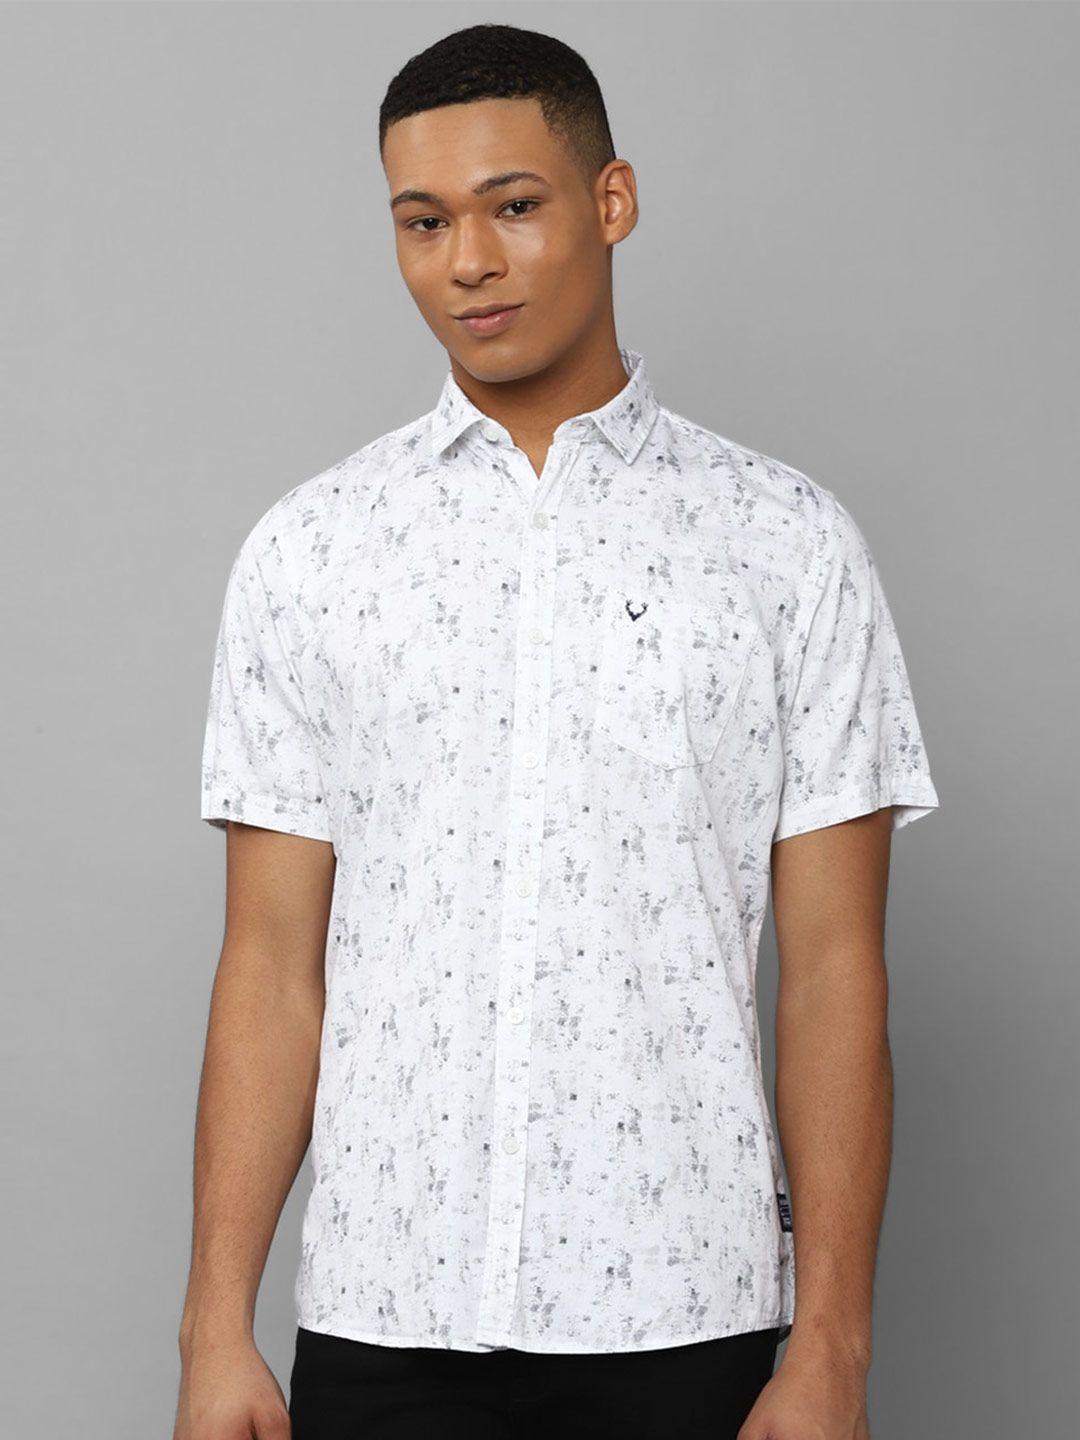 allen solly custom abstract printed spread collar short sleeves cotton casual shirt